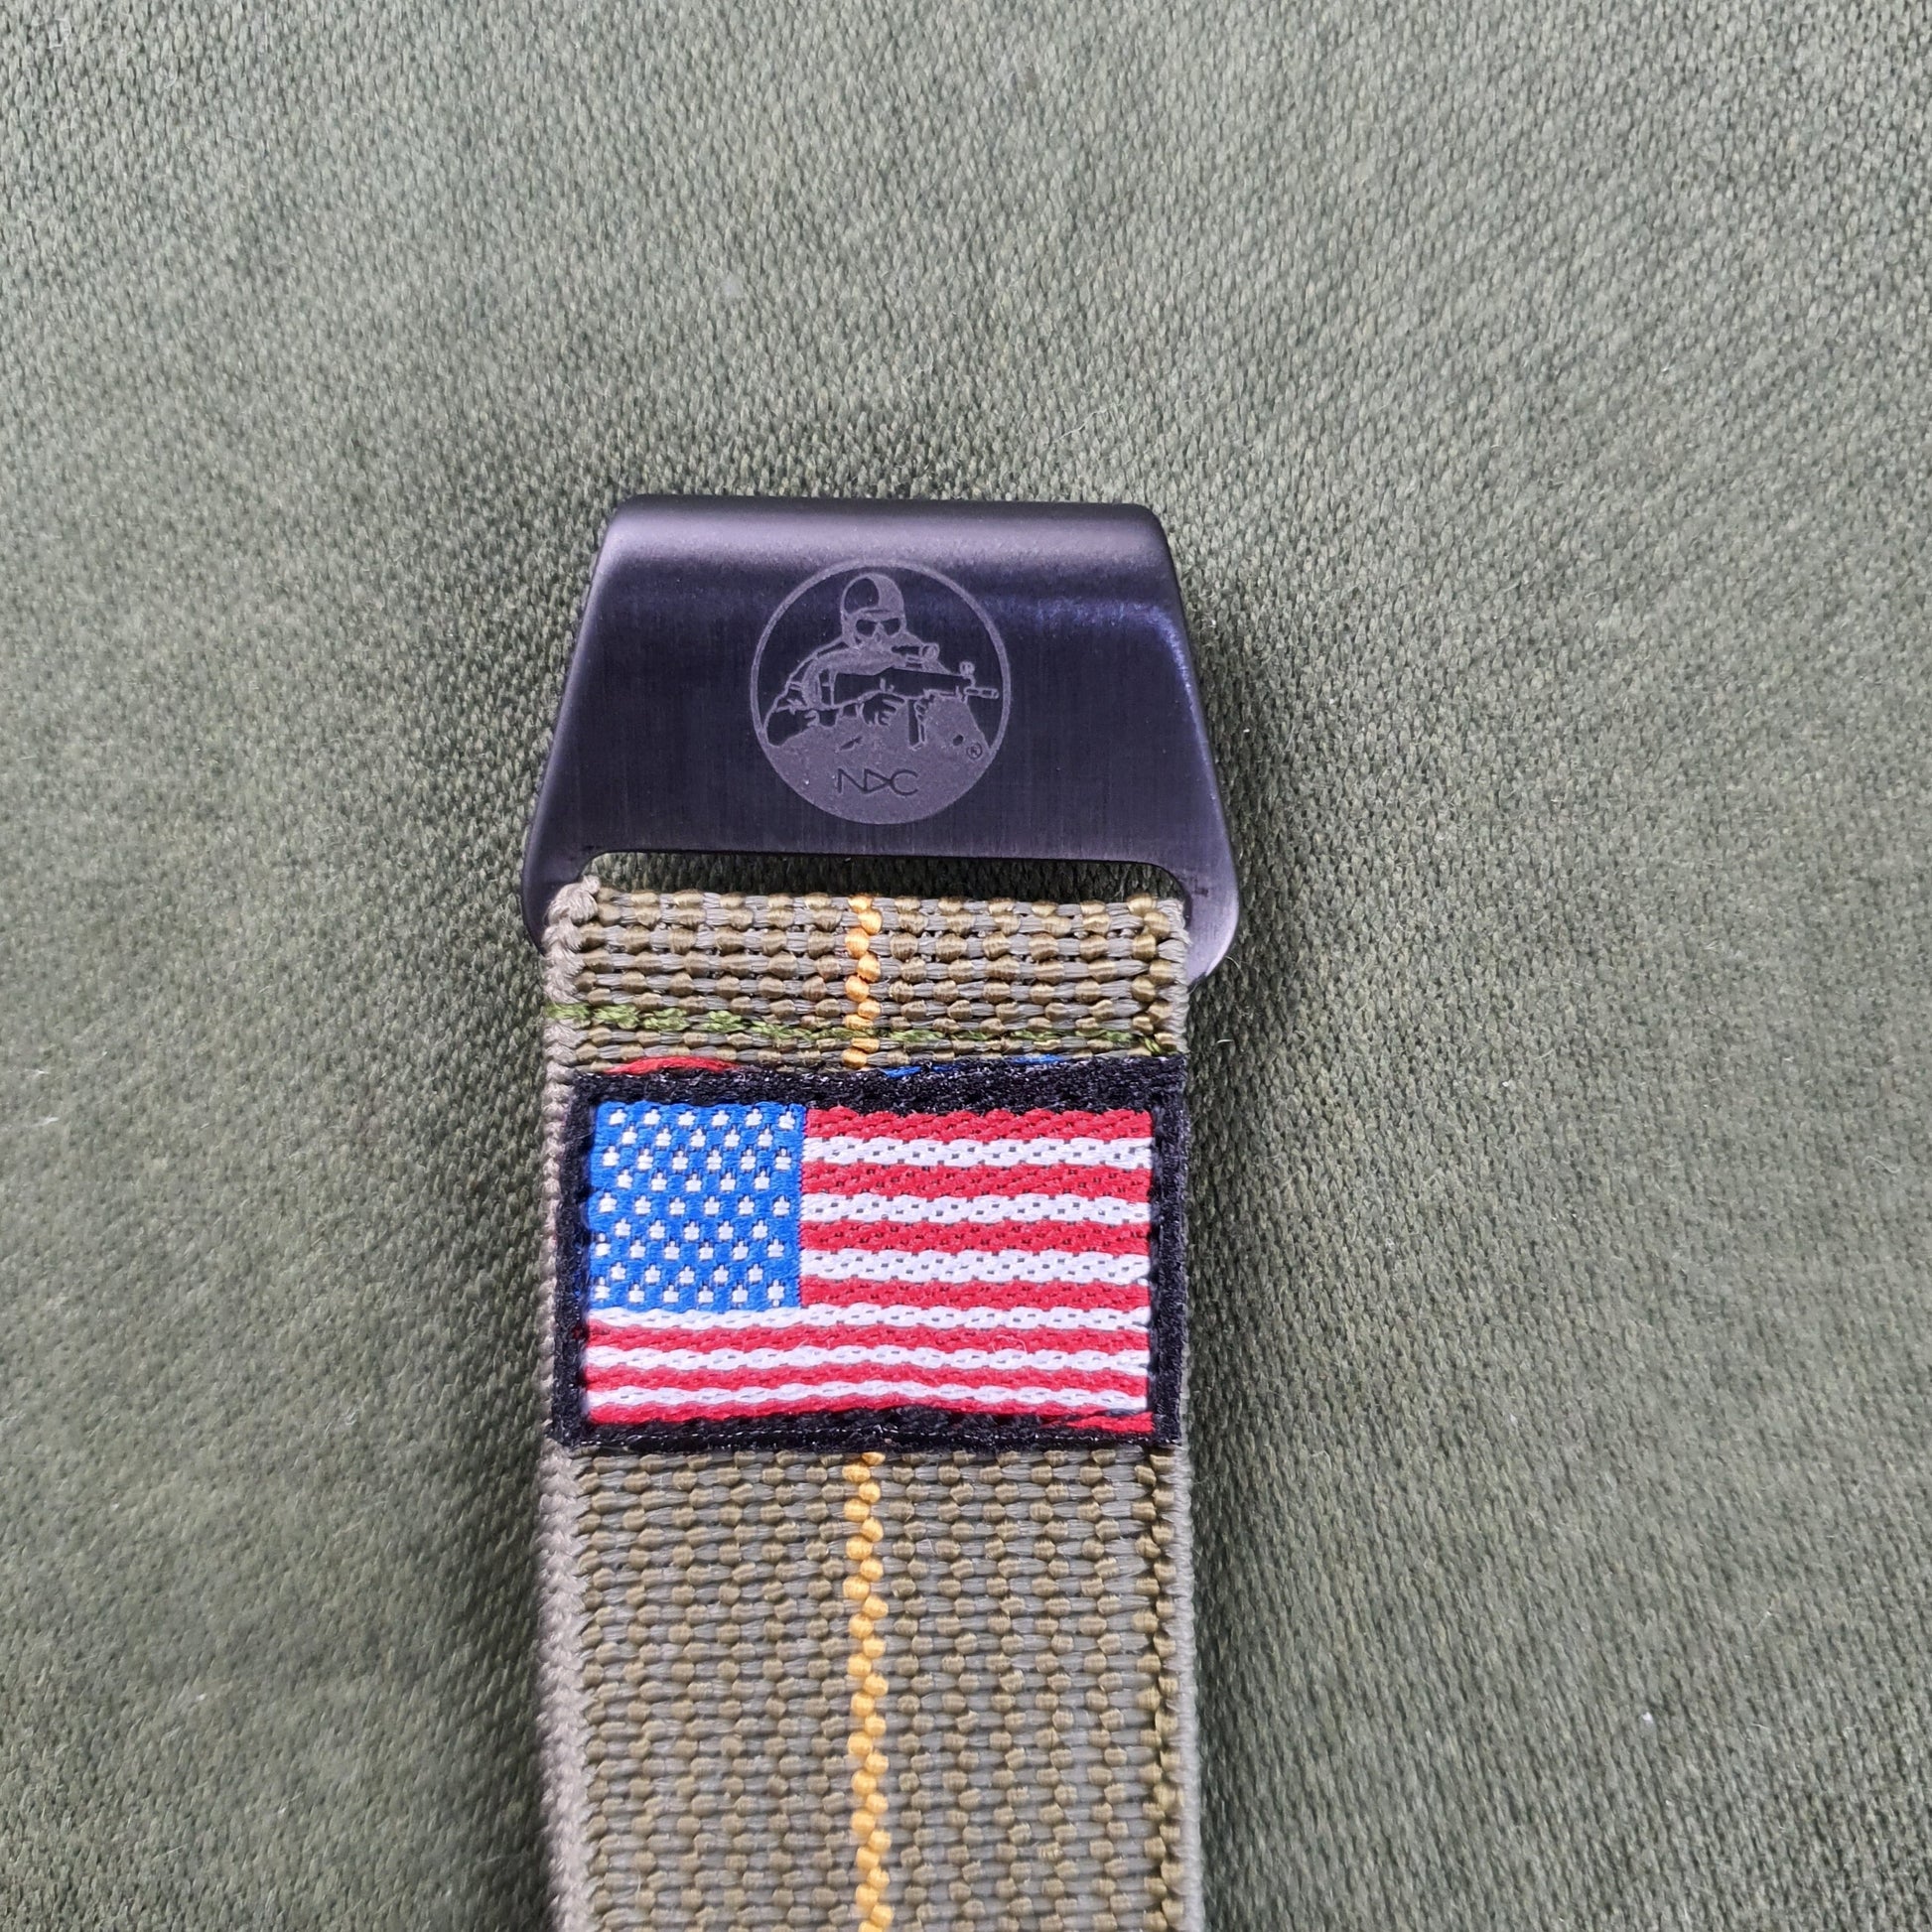 Original NDC strap - with USA flag - NDC Straps